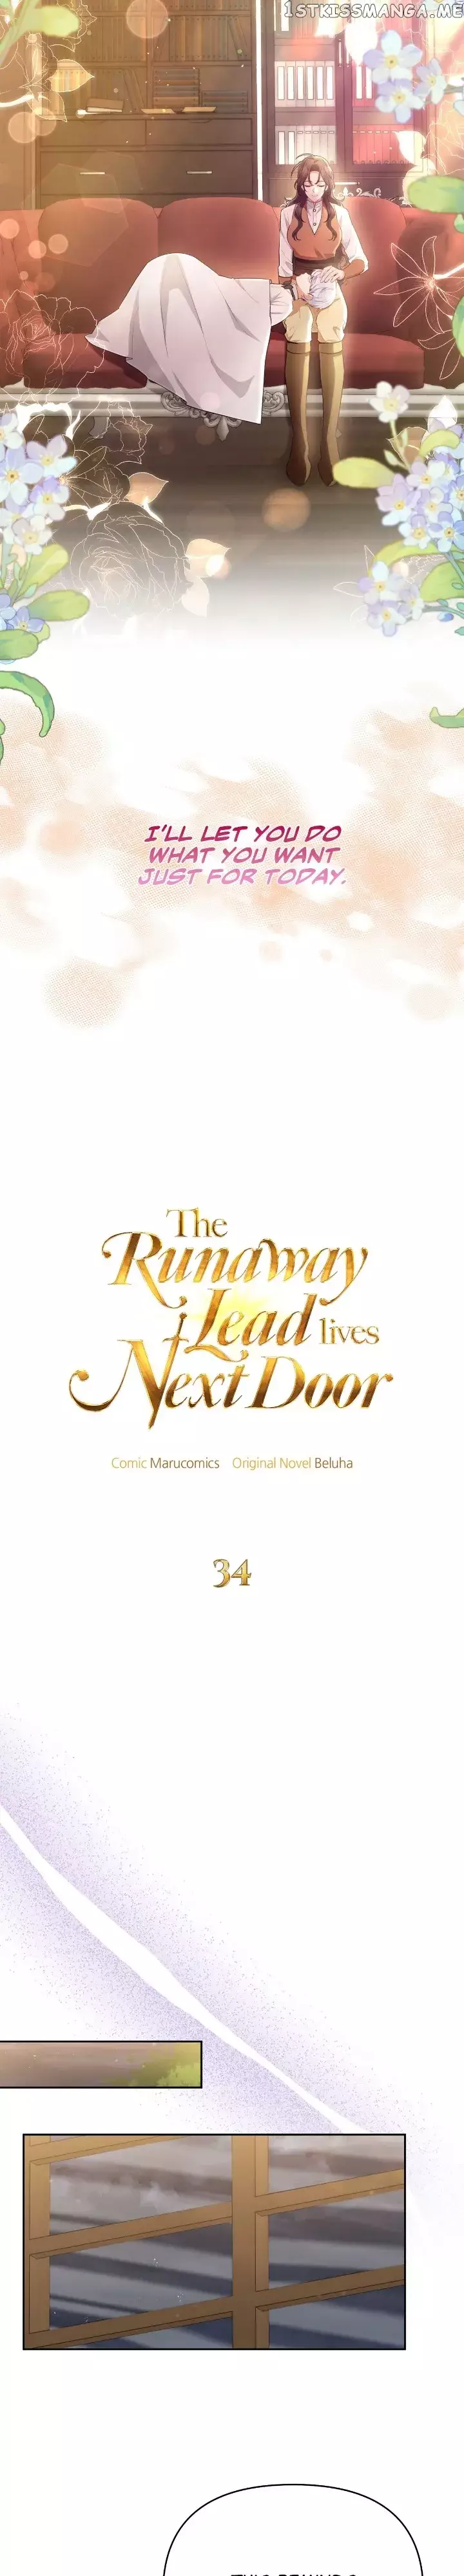 The Runaway Lead Lives Next Door - 34 page 3-21ea2f42